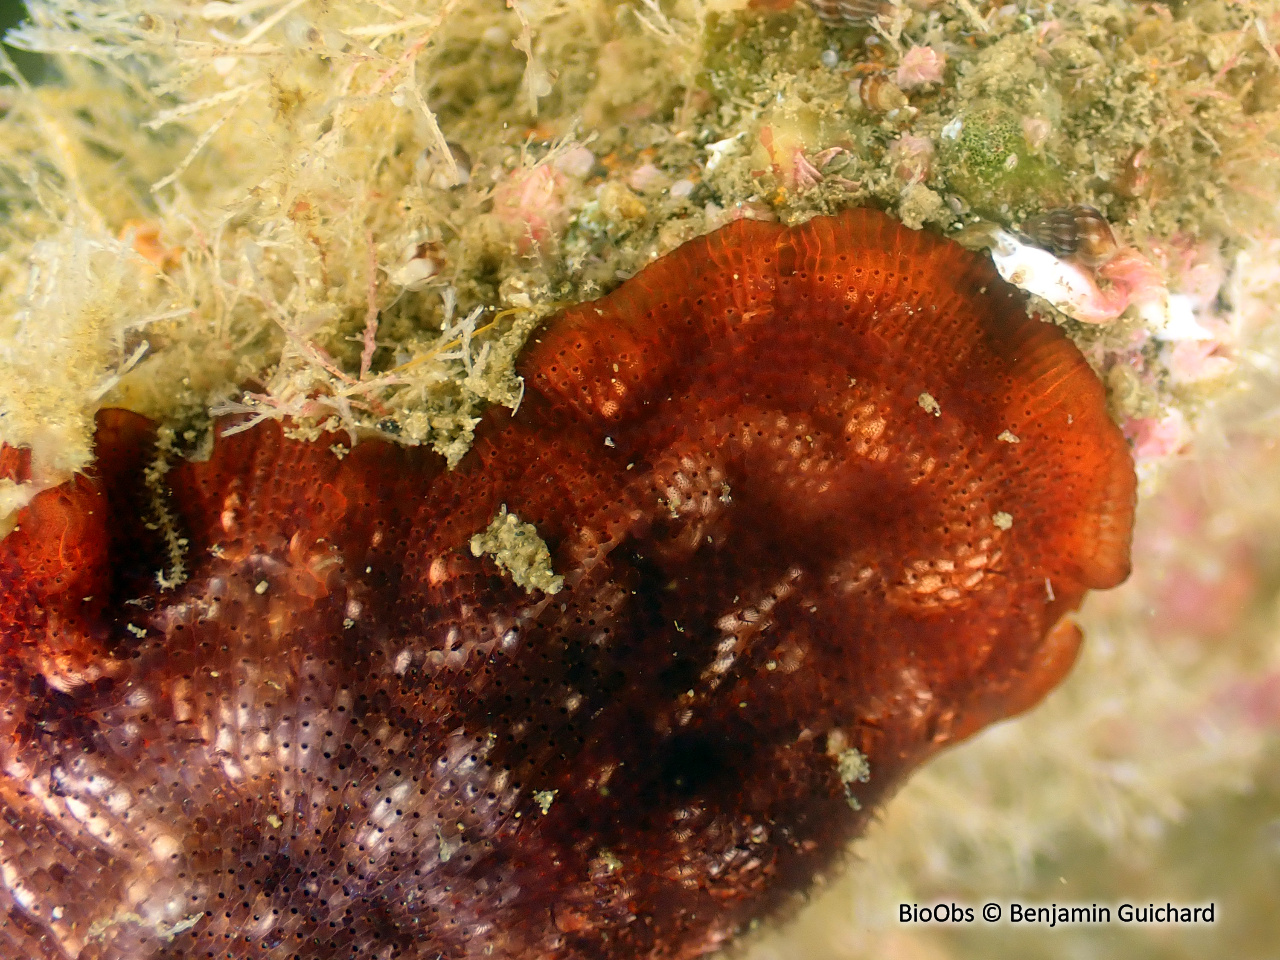 Bryozoaire rouge orange vif à points noirs - Watersipora subtorquata - Benjamin Guichard - BioObs